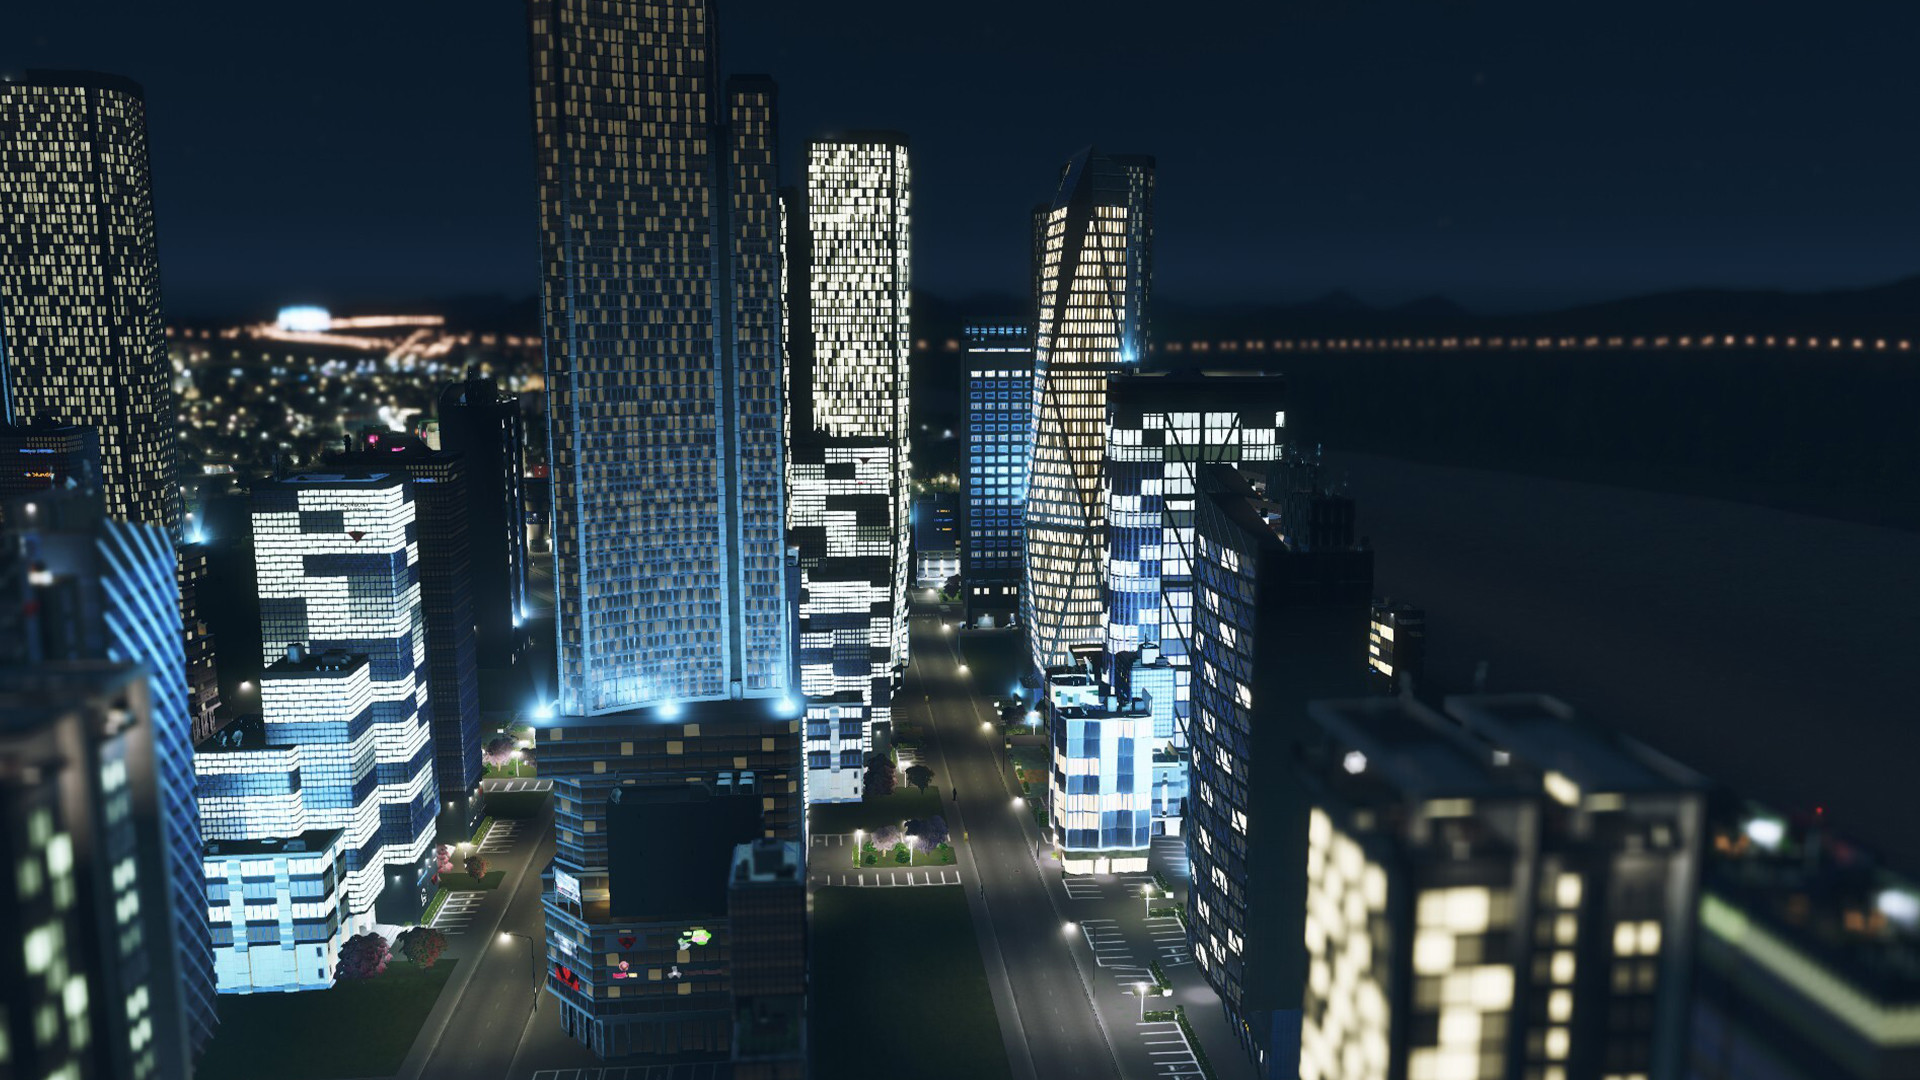 Cities: Skylines II, PC Steam Jogo